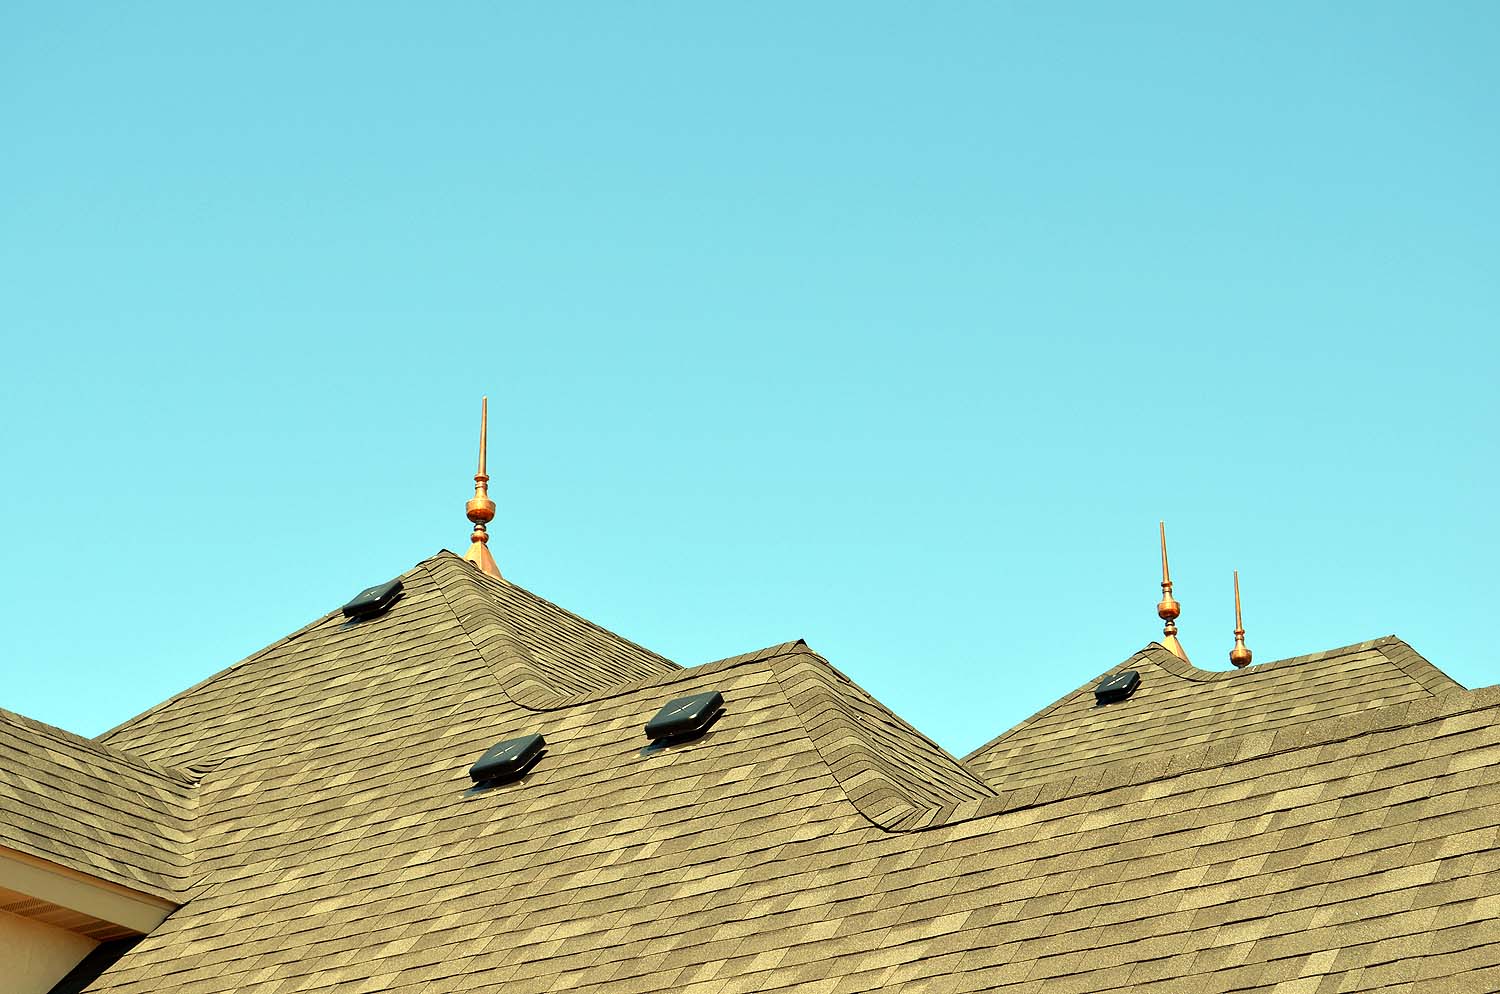 Copper roof spires